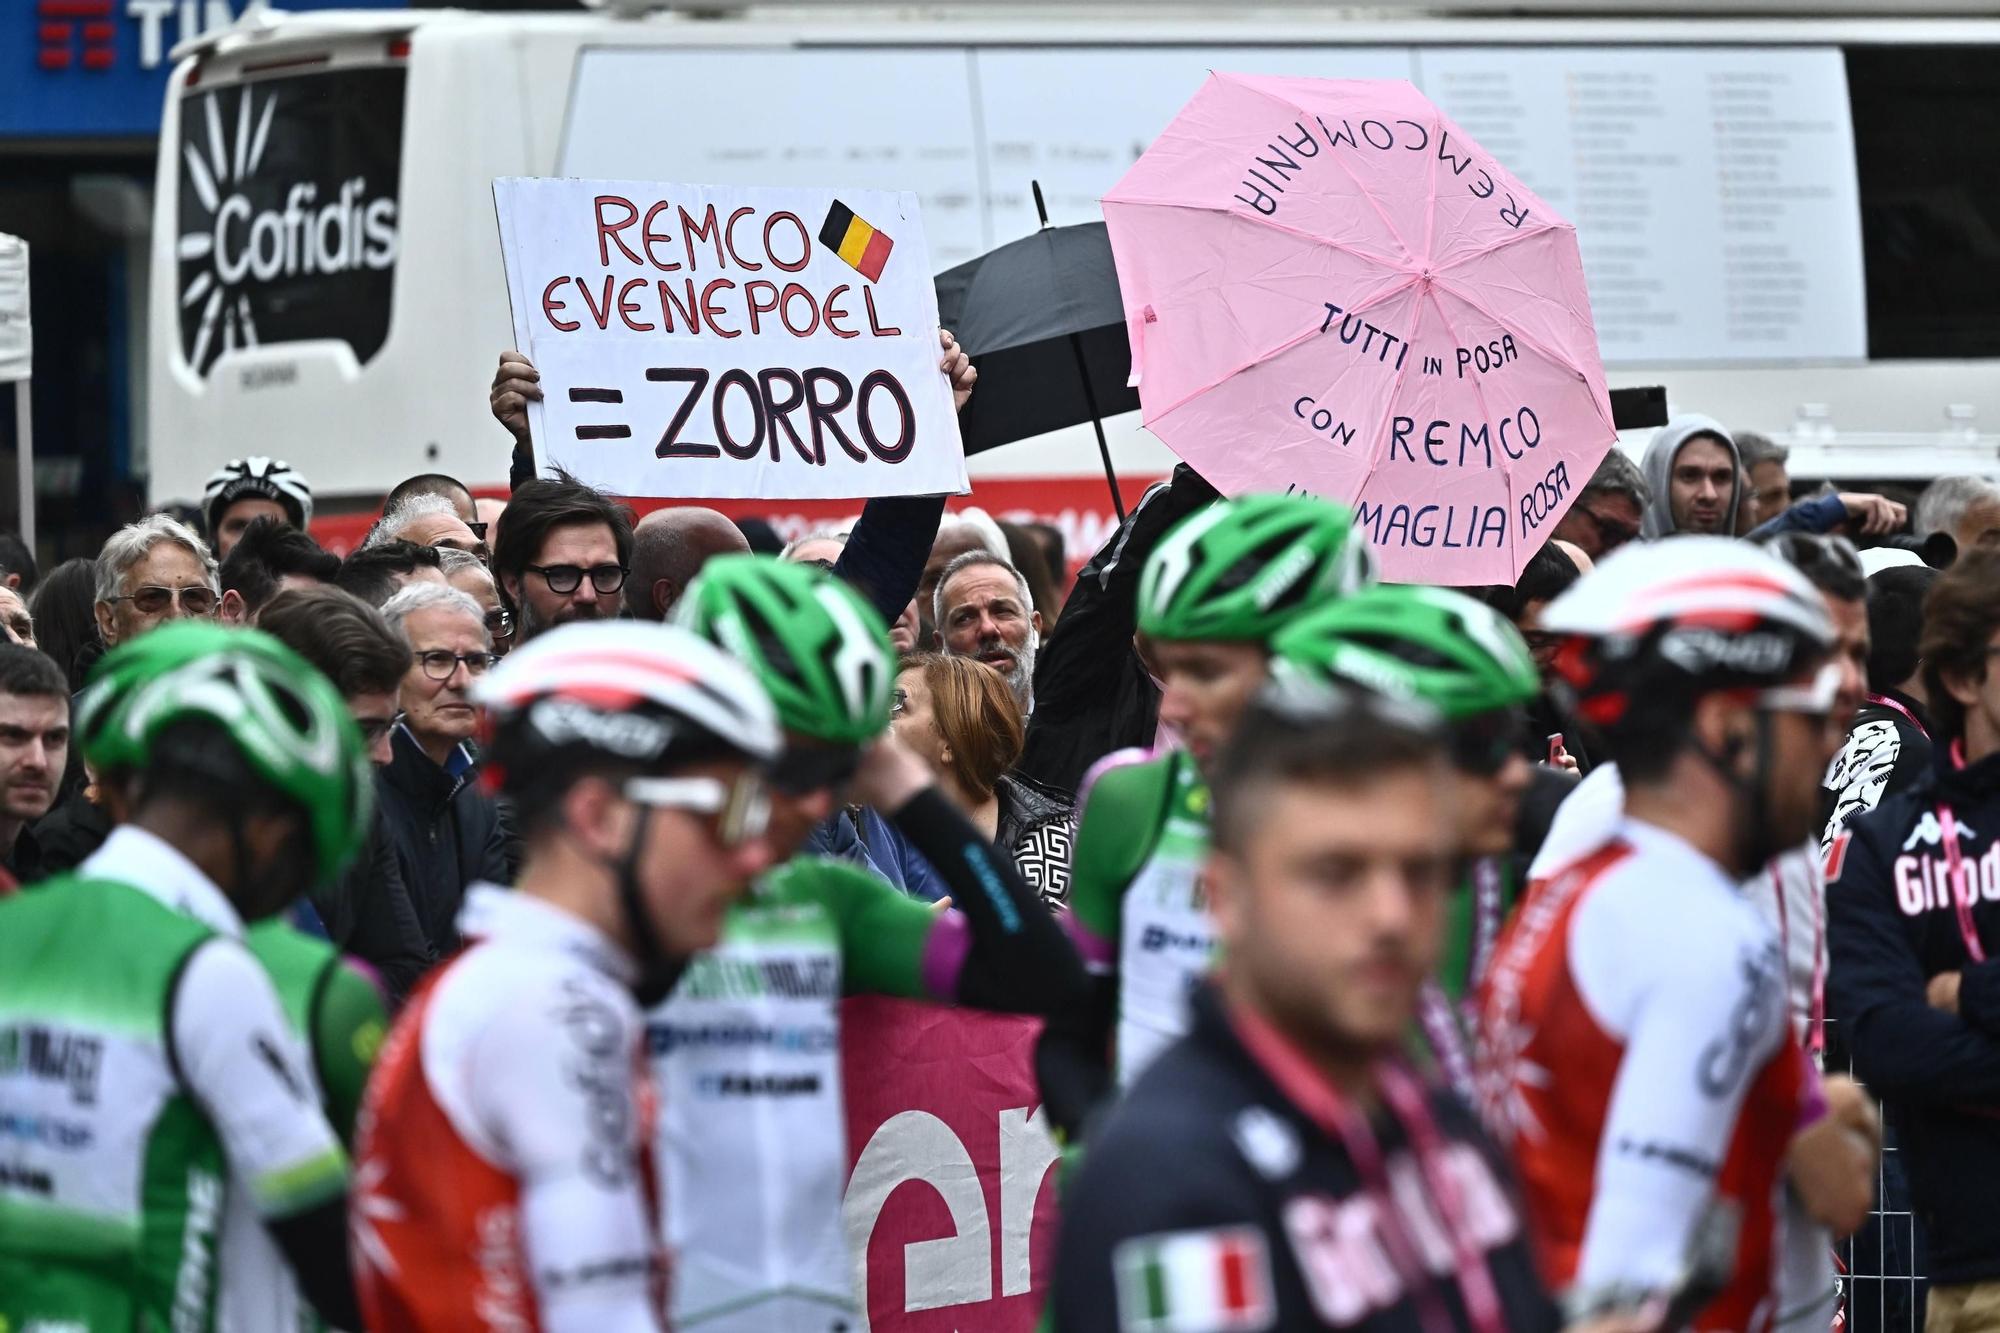 Giro d'Italia - 8th stage